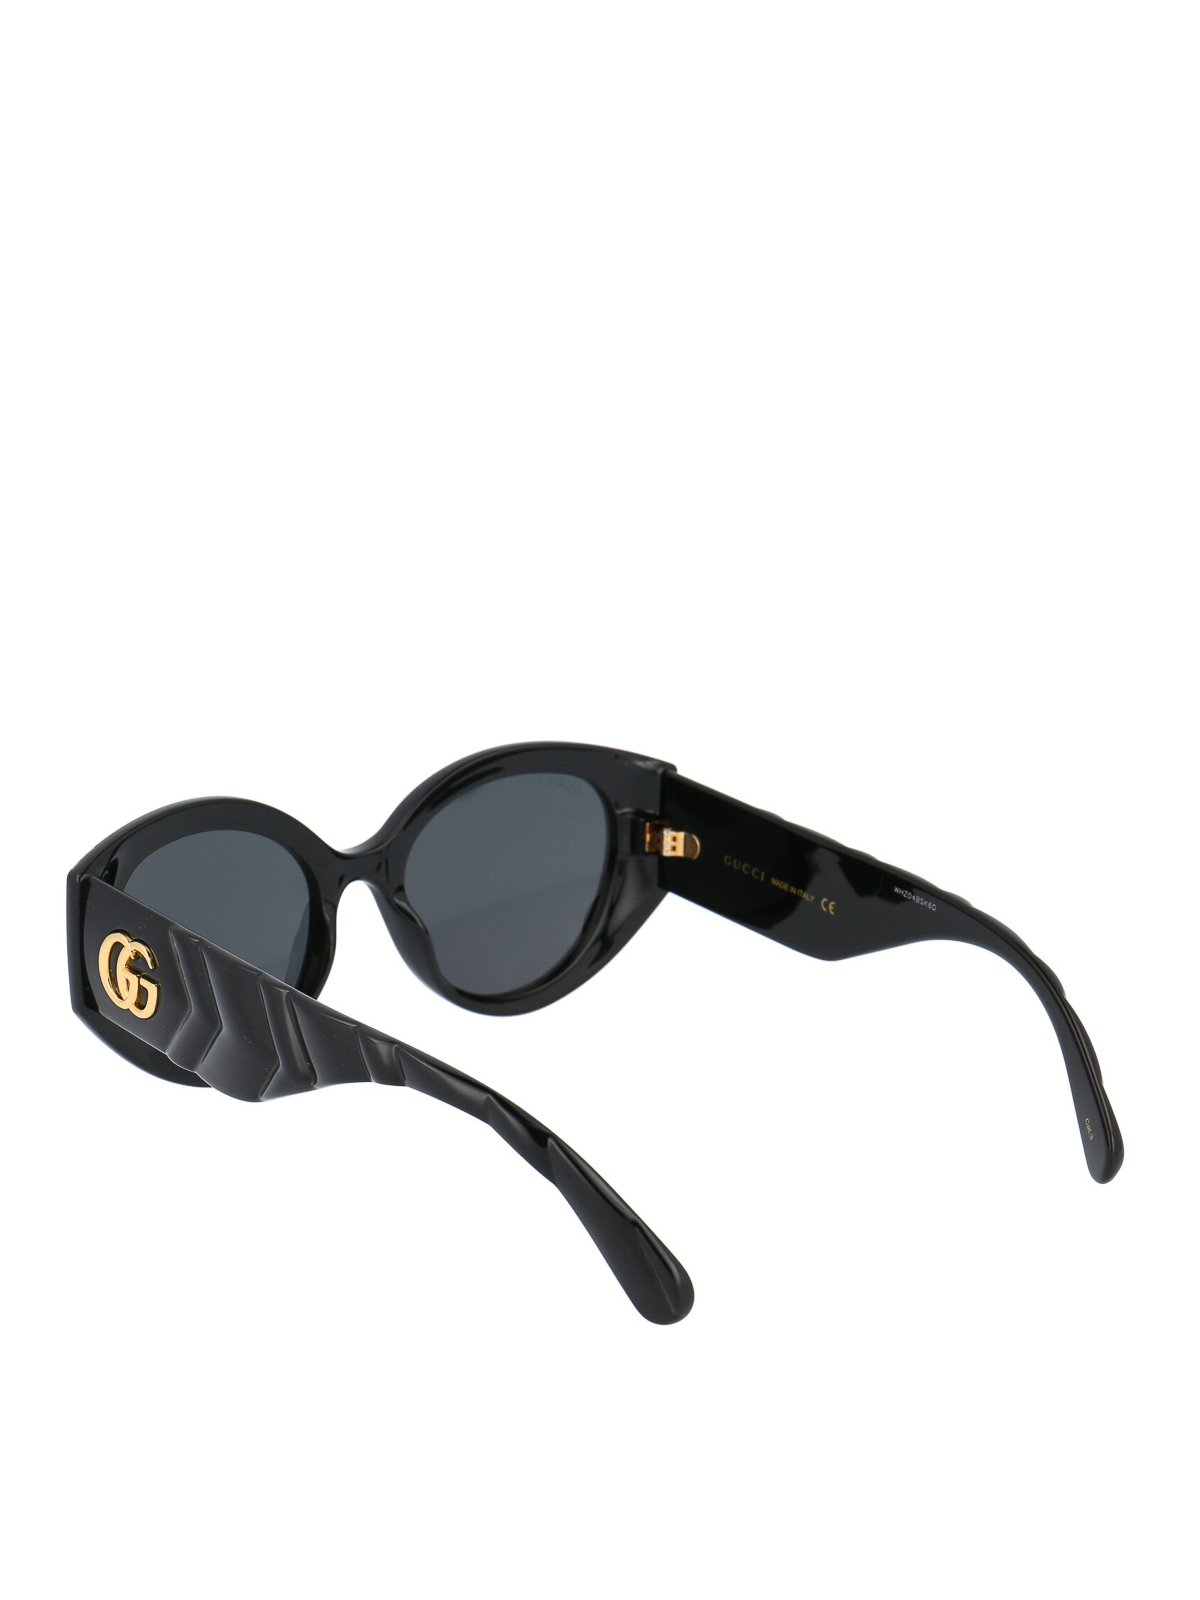 gucci sunglasses shop online